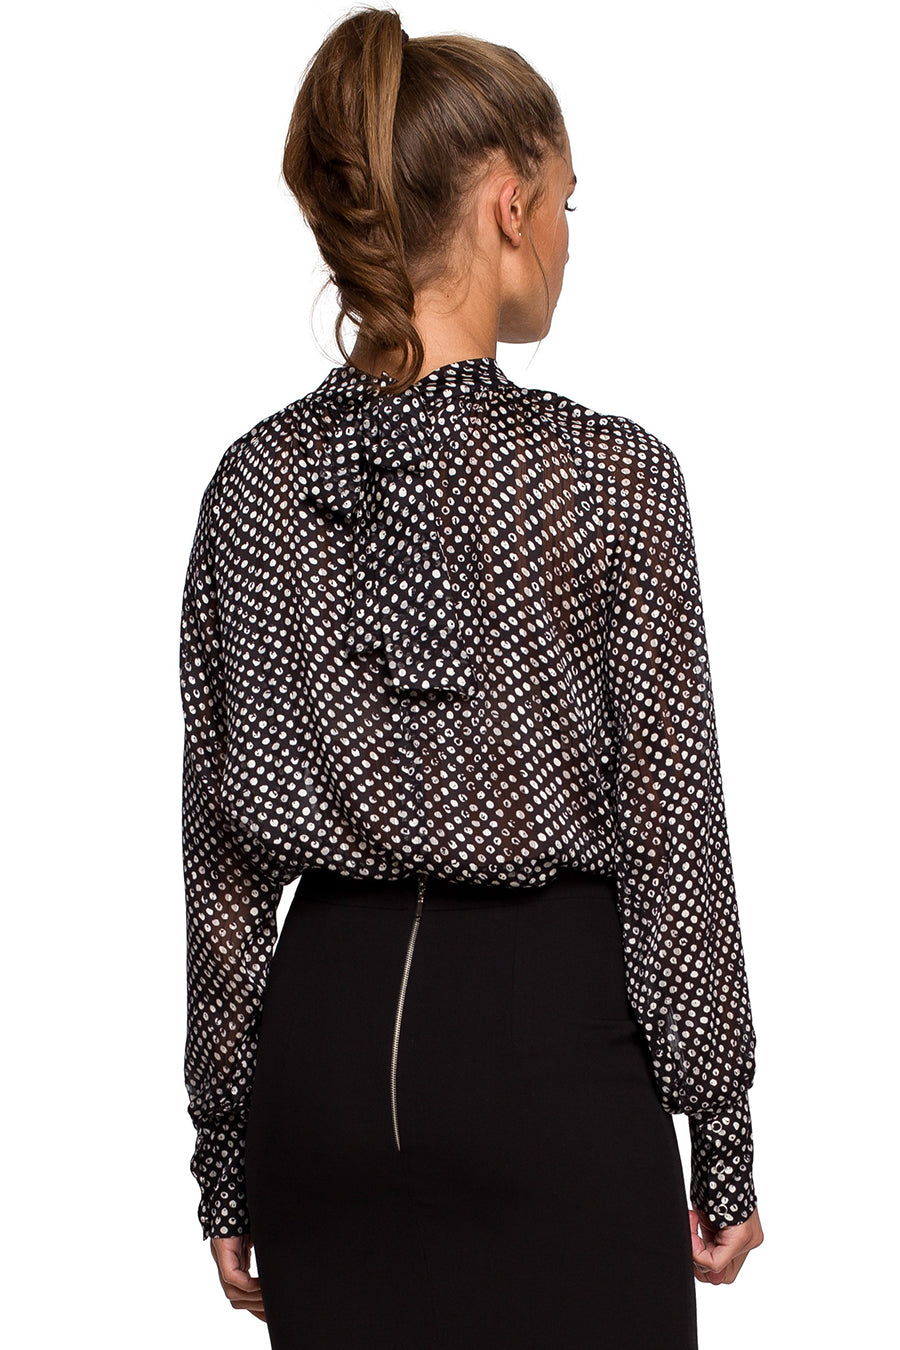 Дамска блуза Sandrine, Черен/Бял 4